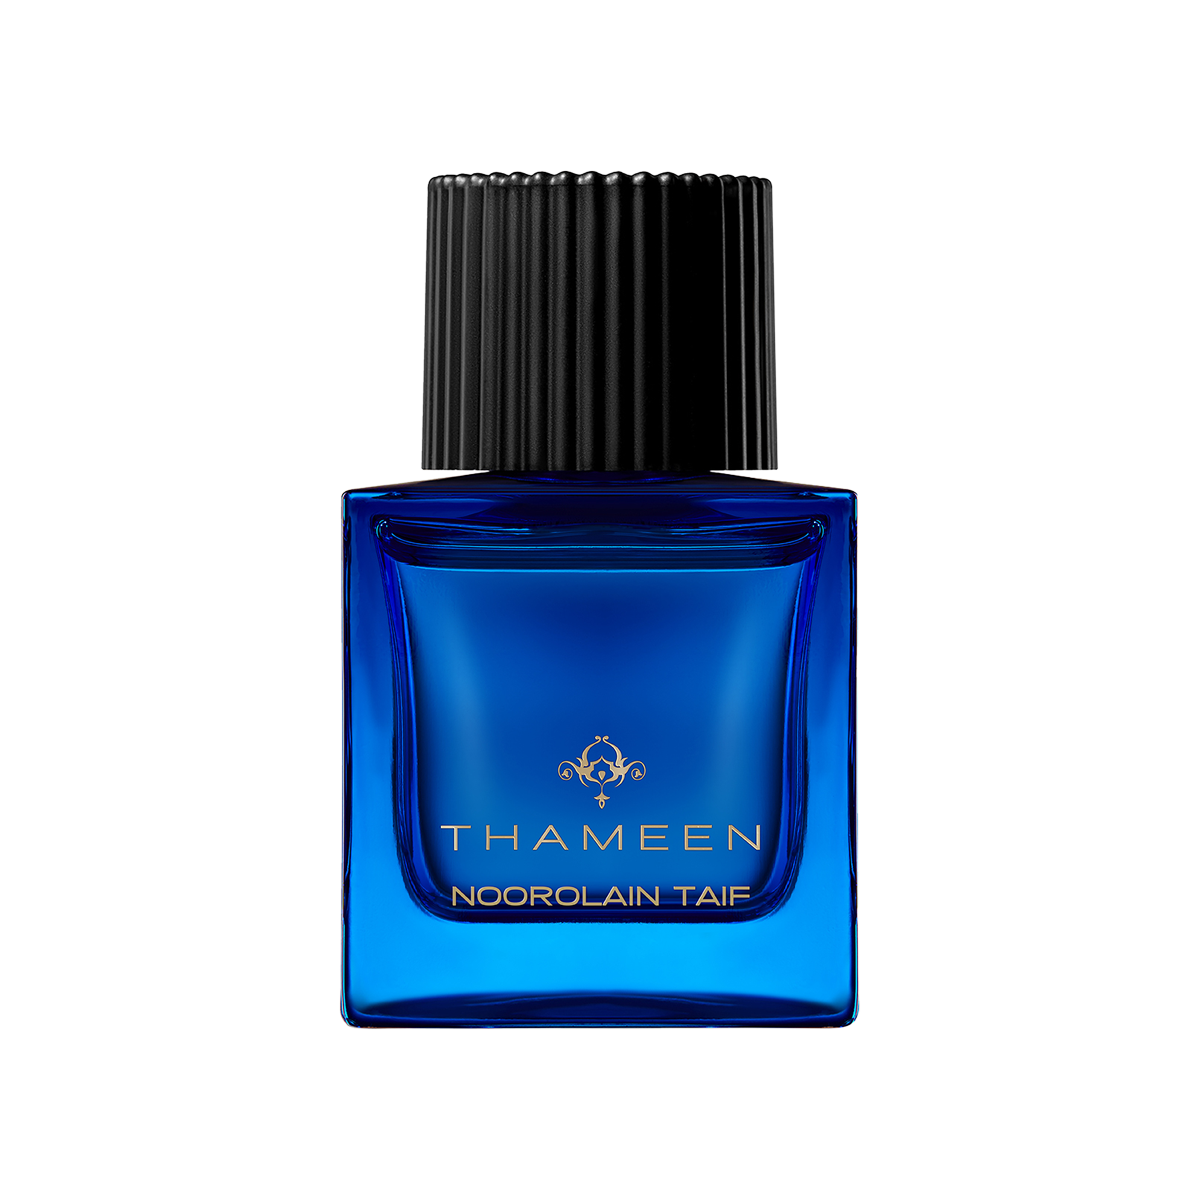 Thameen London - Noorolain Taif Extrait de Parfum